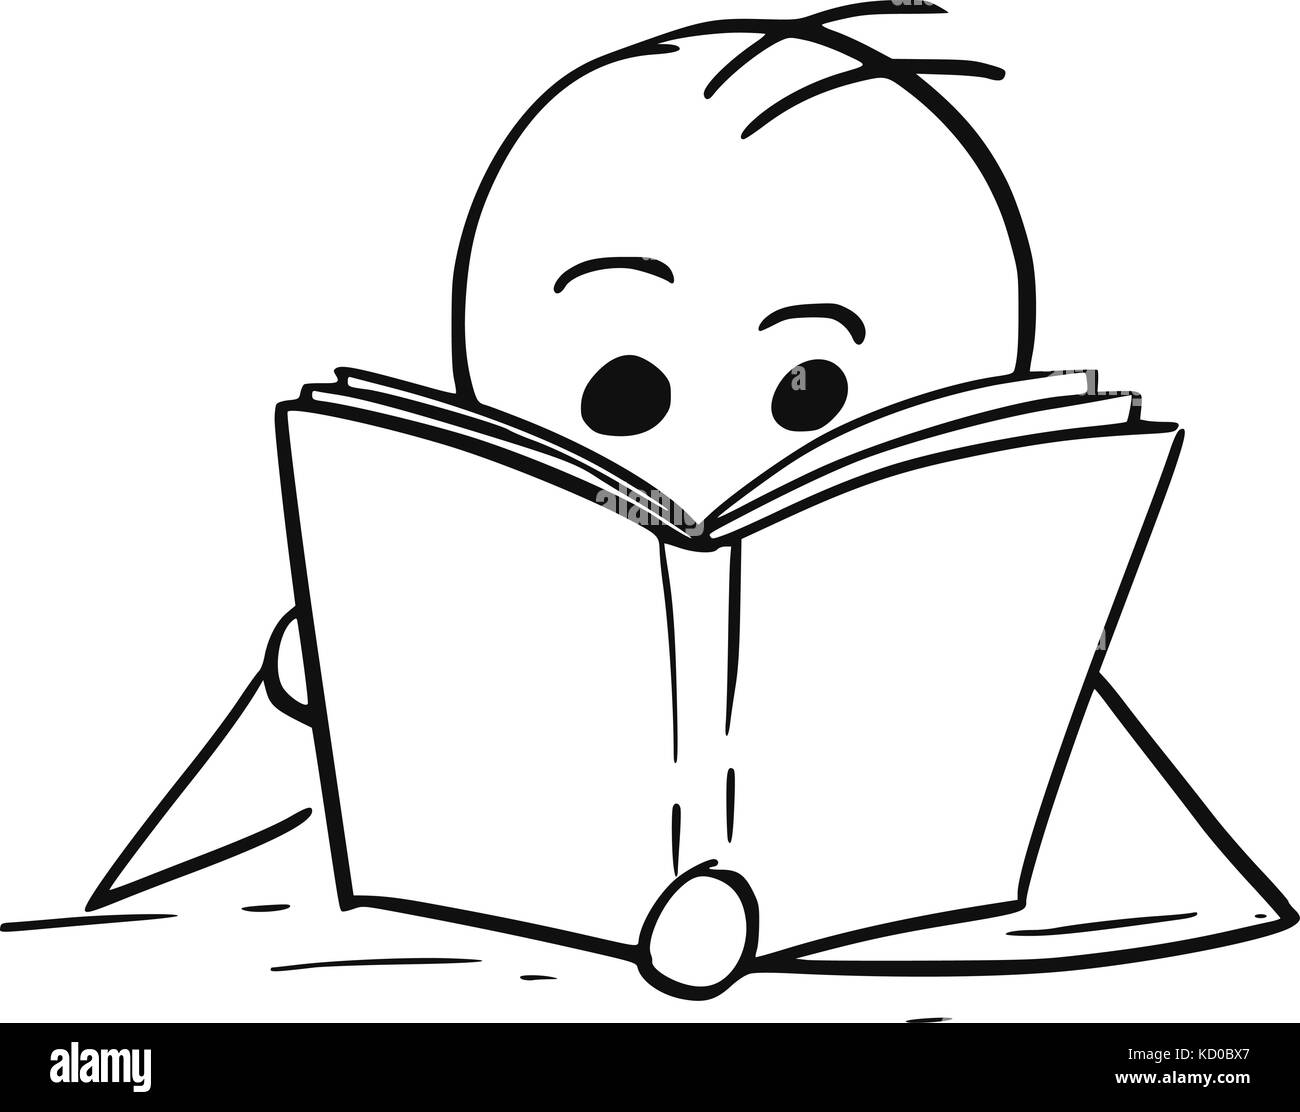 Cartoon stick man illustration of boy or man reading a book. Stock Vector